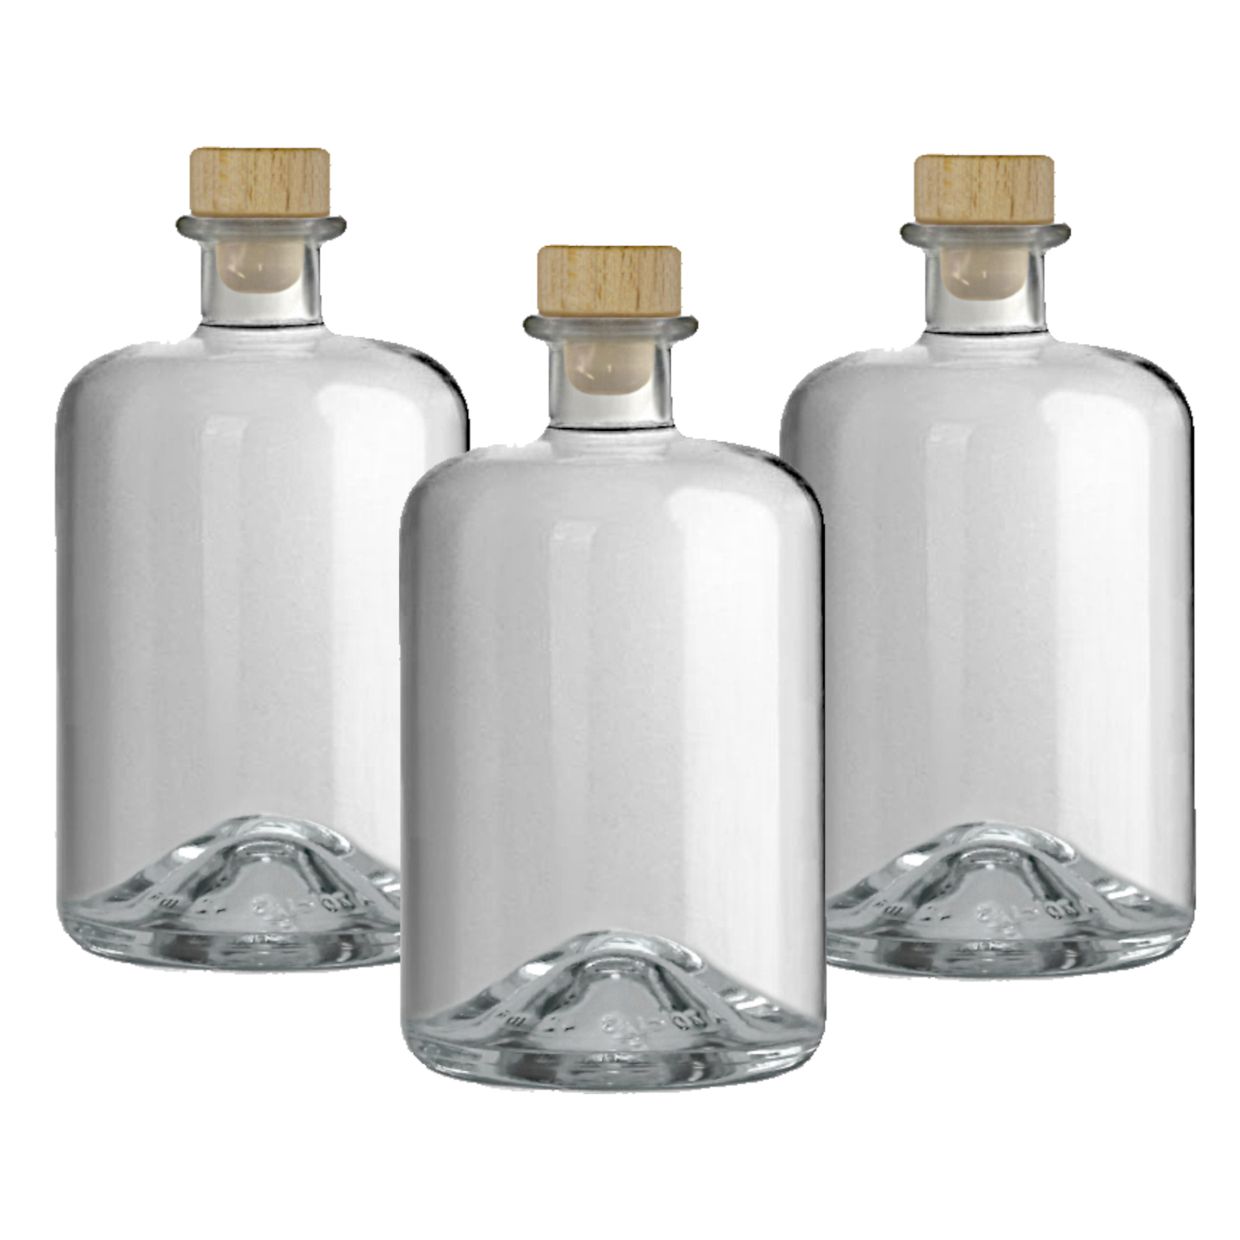 Apothekerflaschen 700ml Glas Flaschen leer Essigflaschen Ölflaschen  Schnapsflaschen Likörflaschen zum selbst befüllen